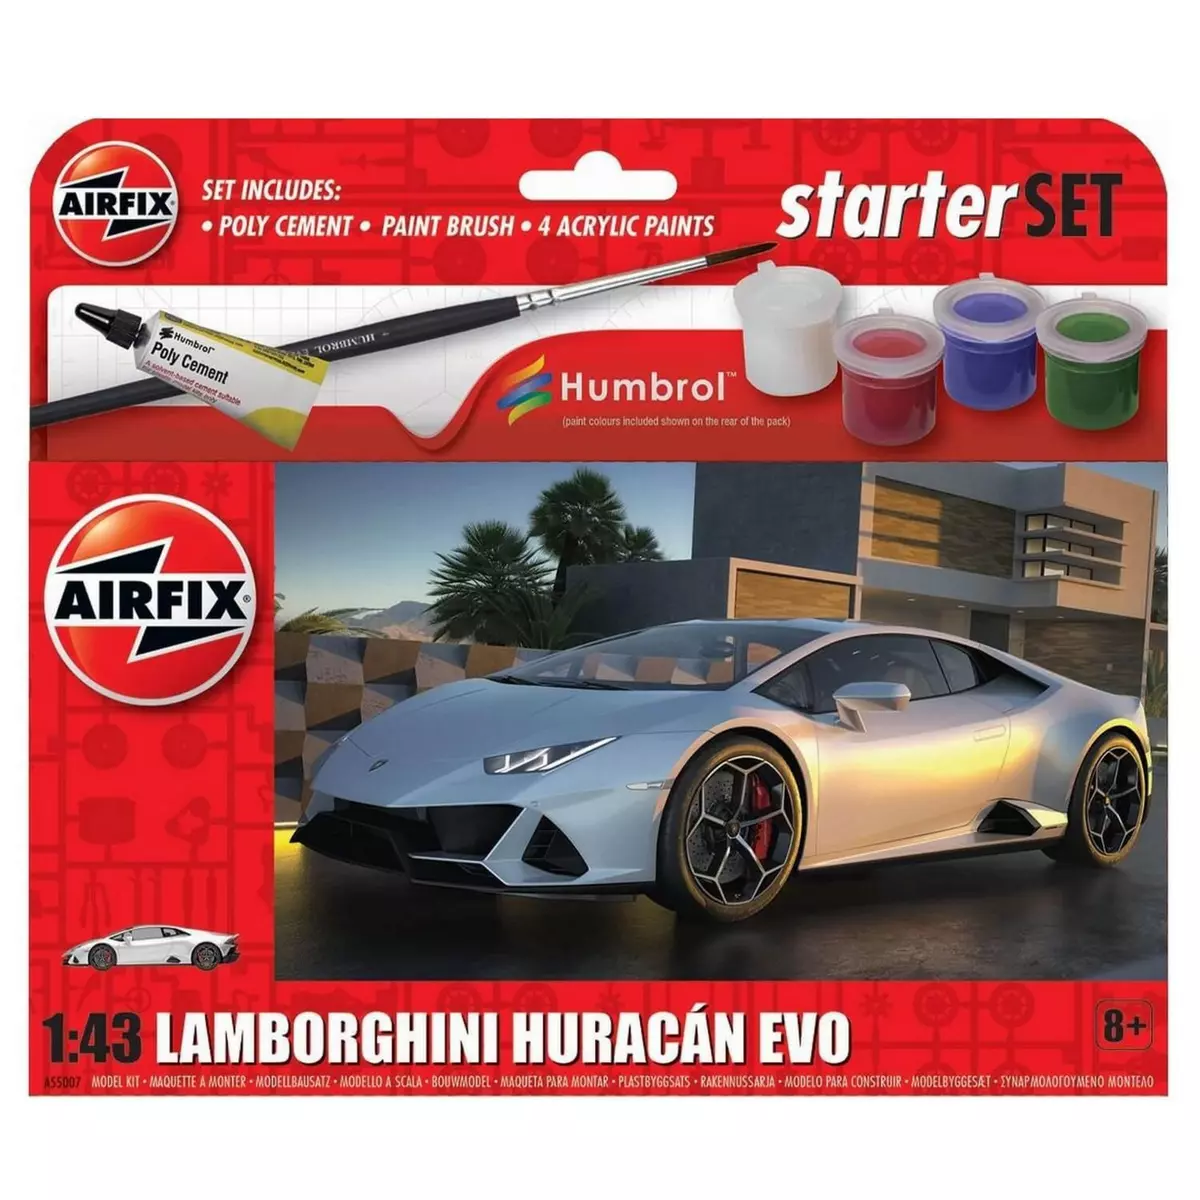 Airfix Maquette voiture : Starter Set - Lamborghini Huracán EVO